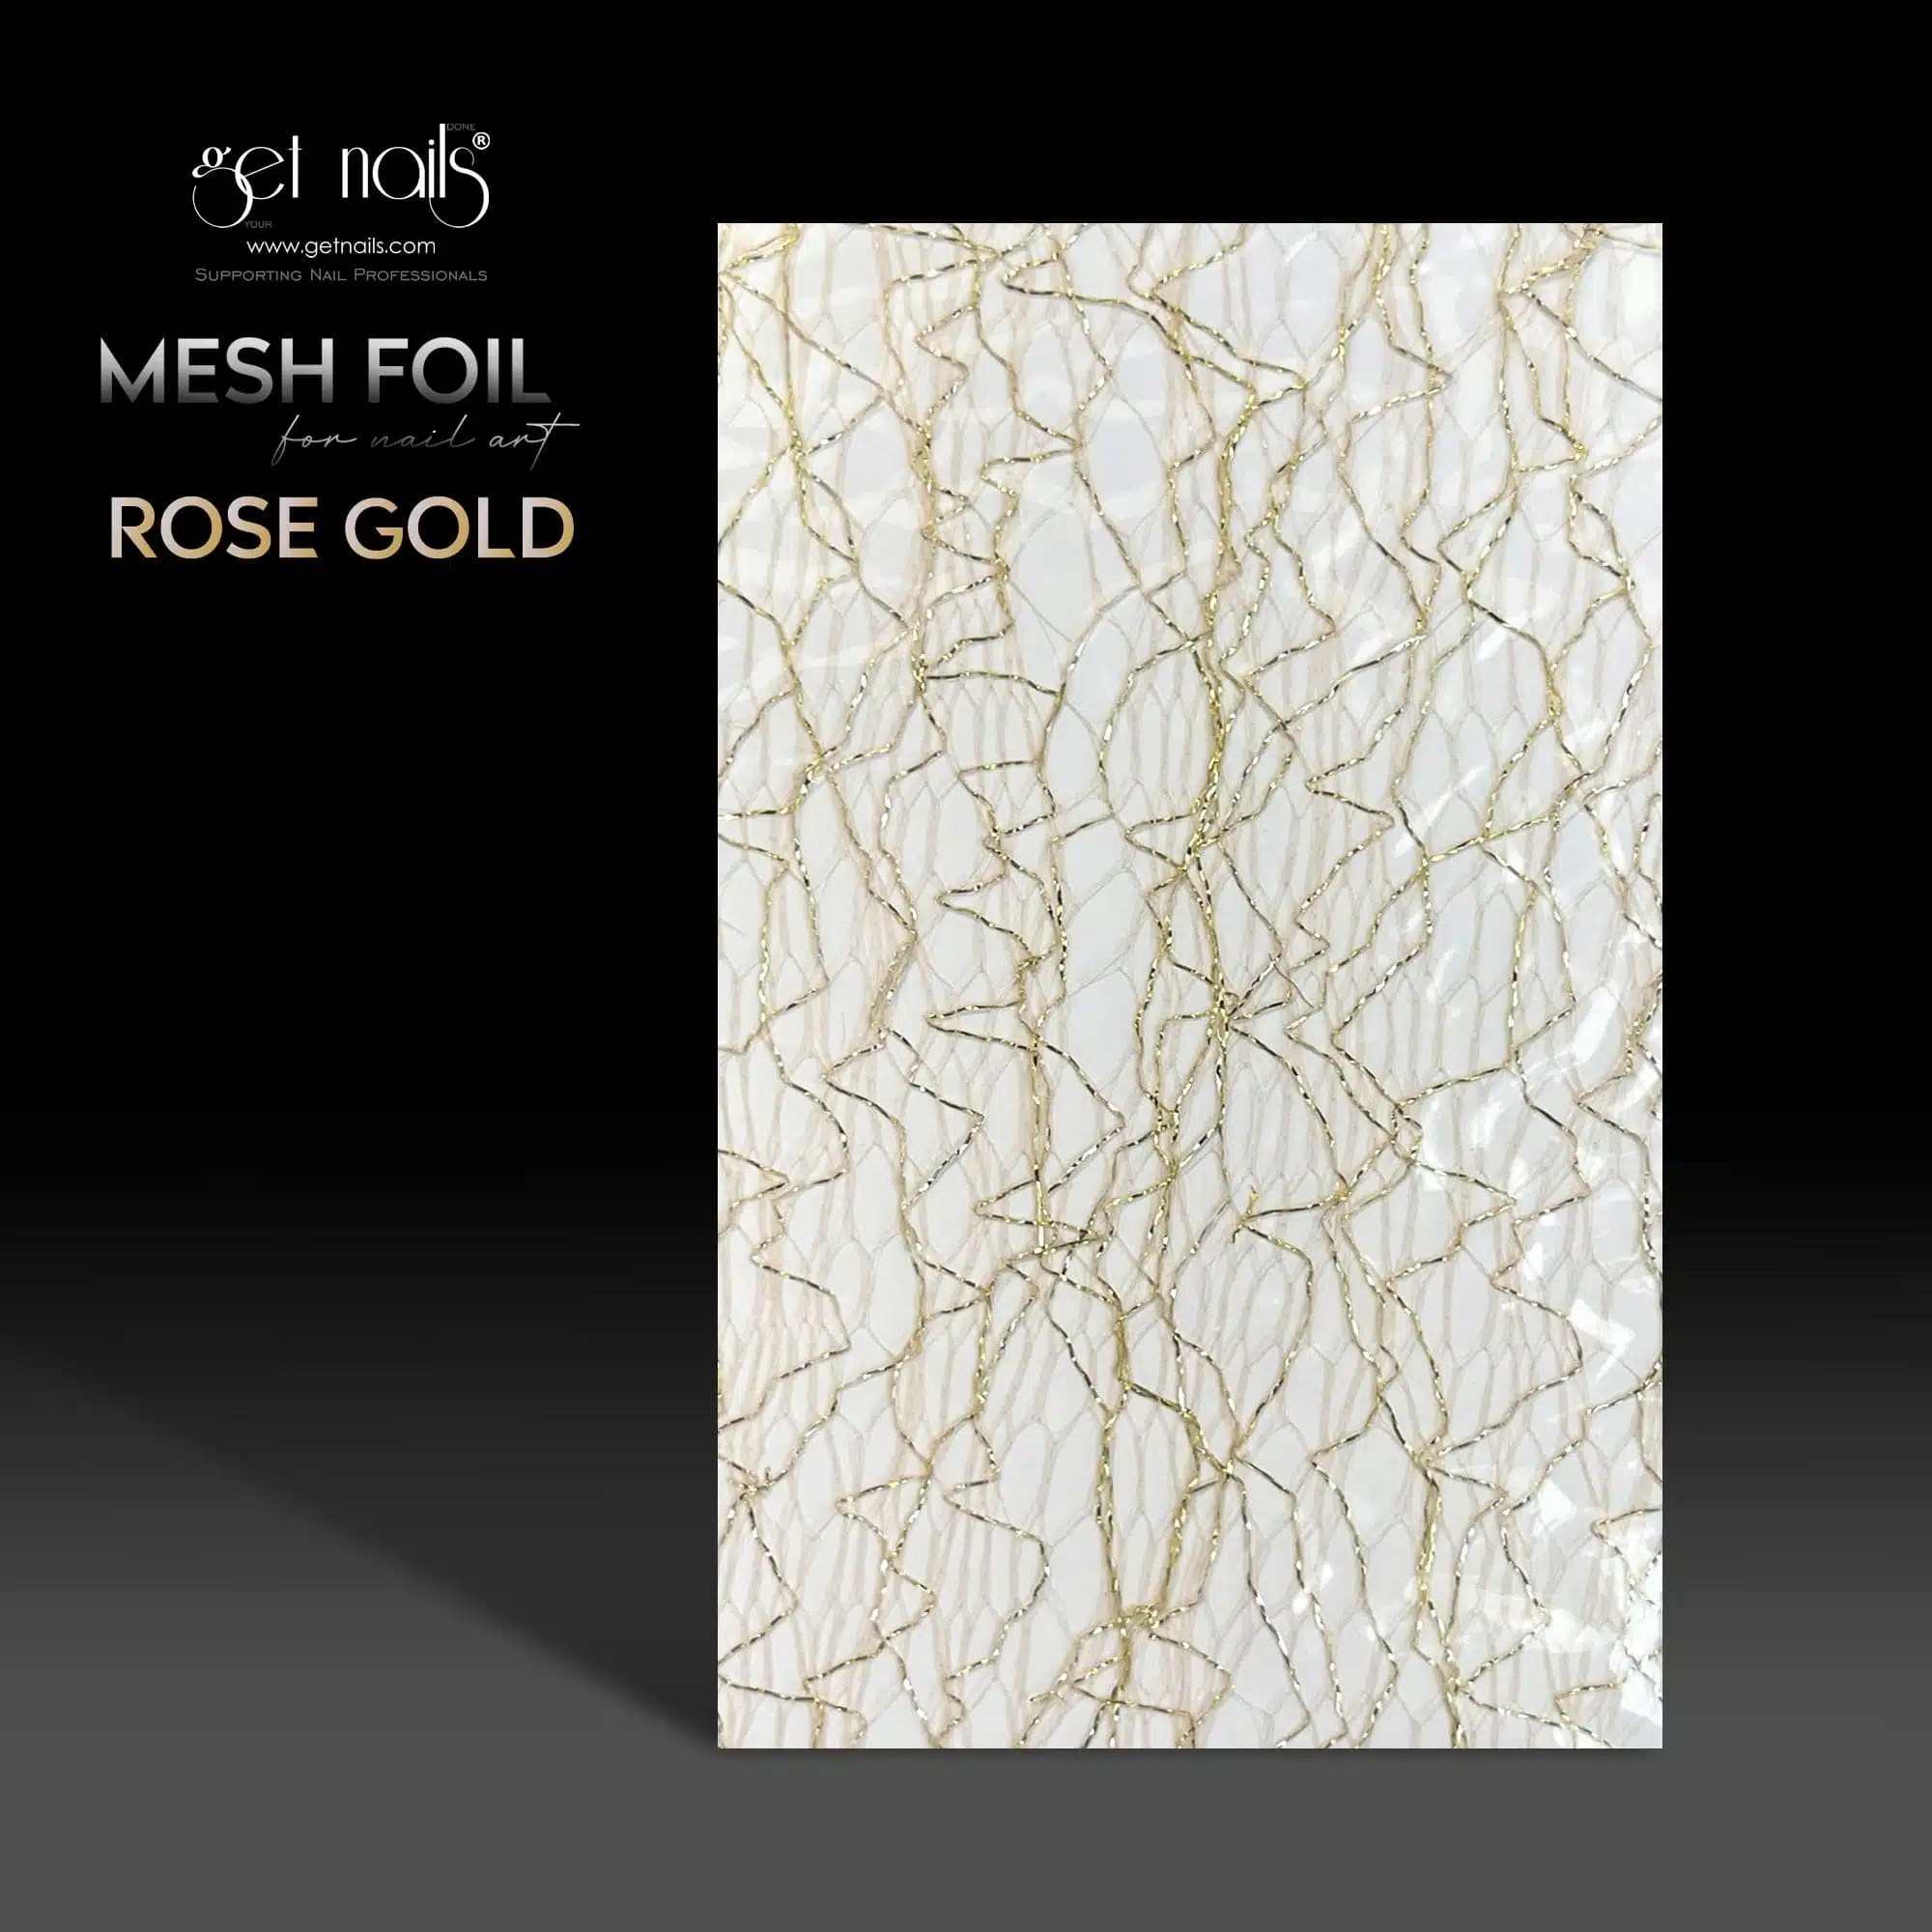 Get Nails Austria - Mesh Foil Rose Gold